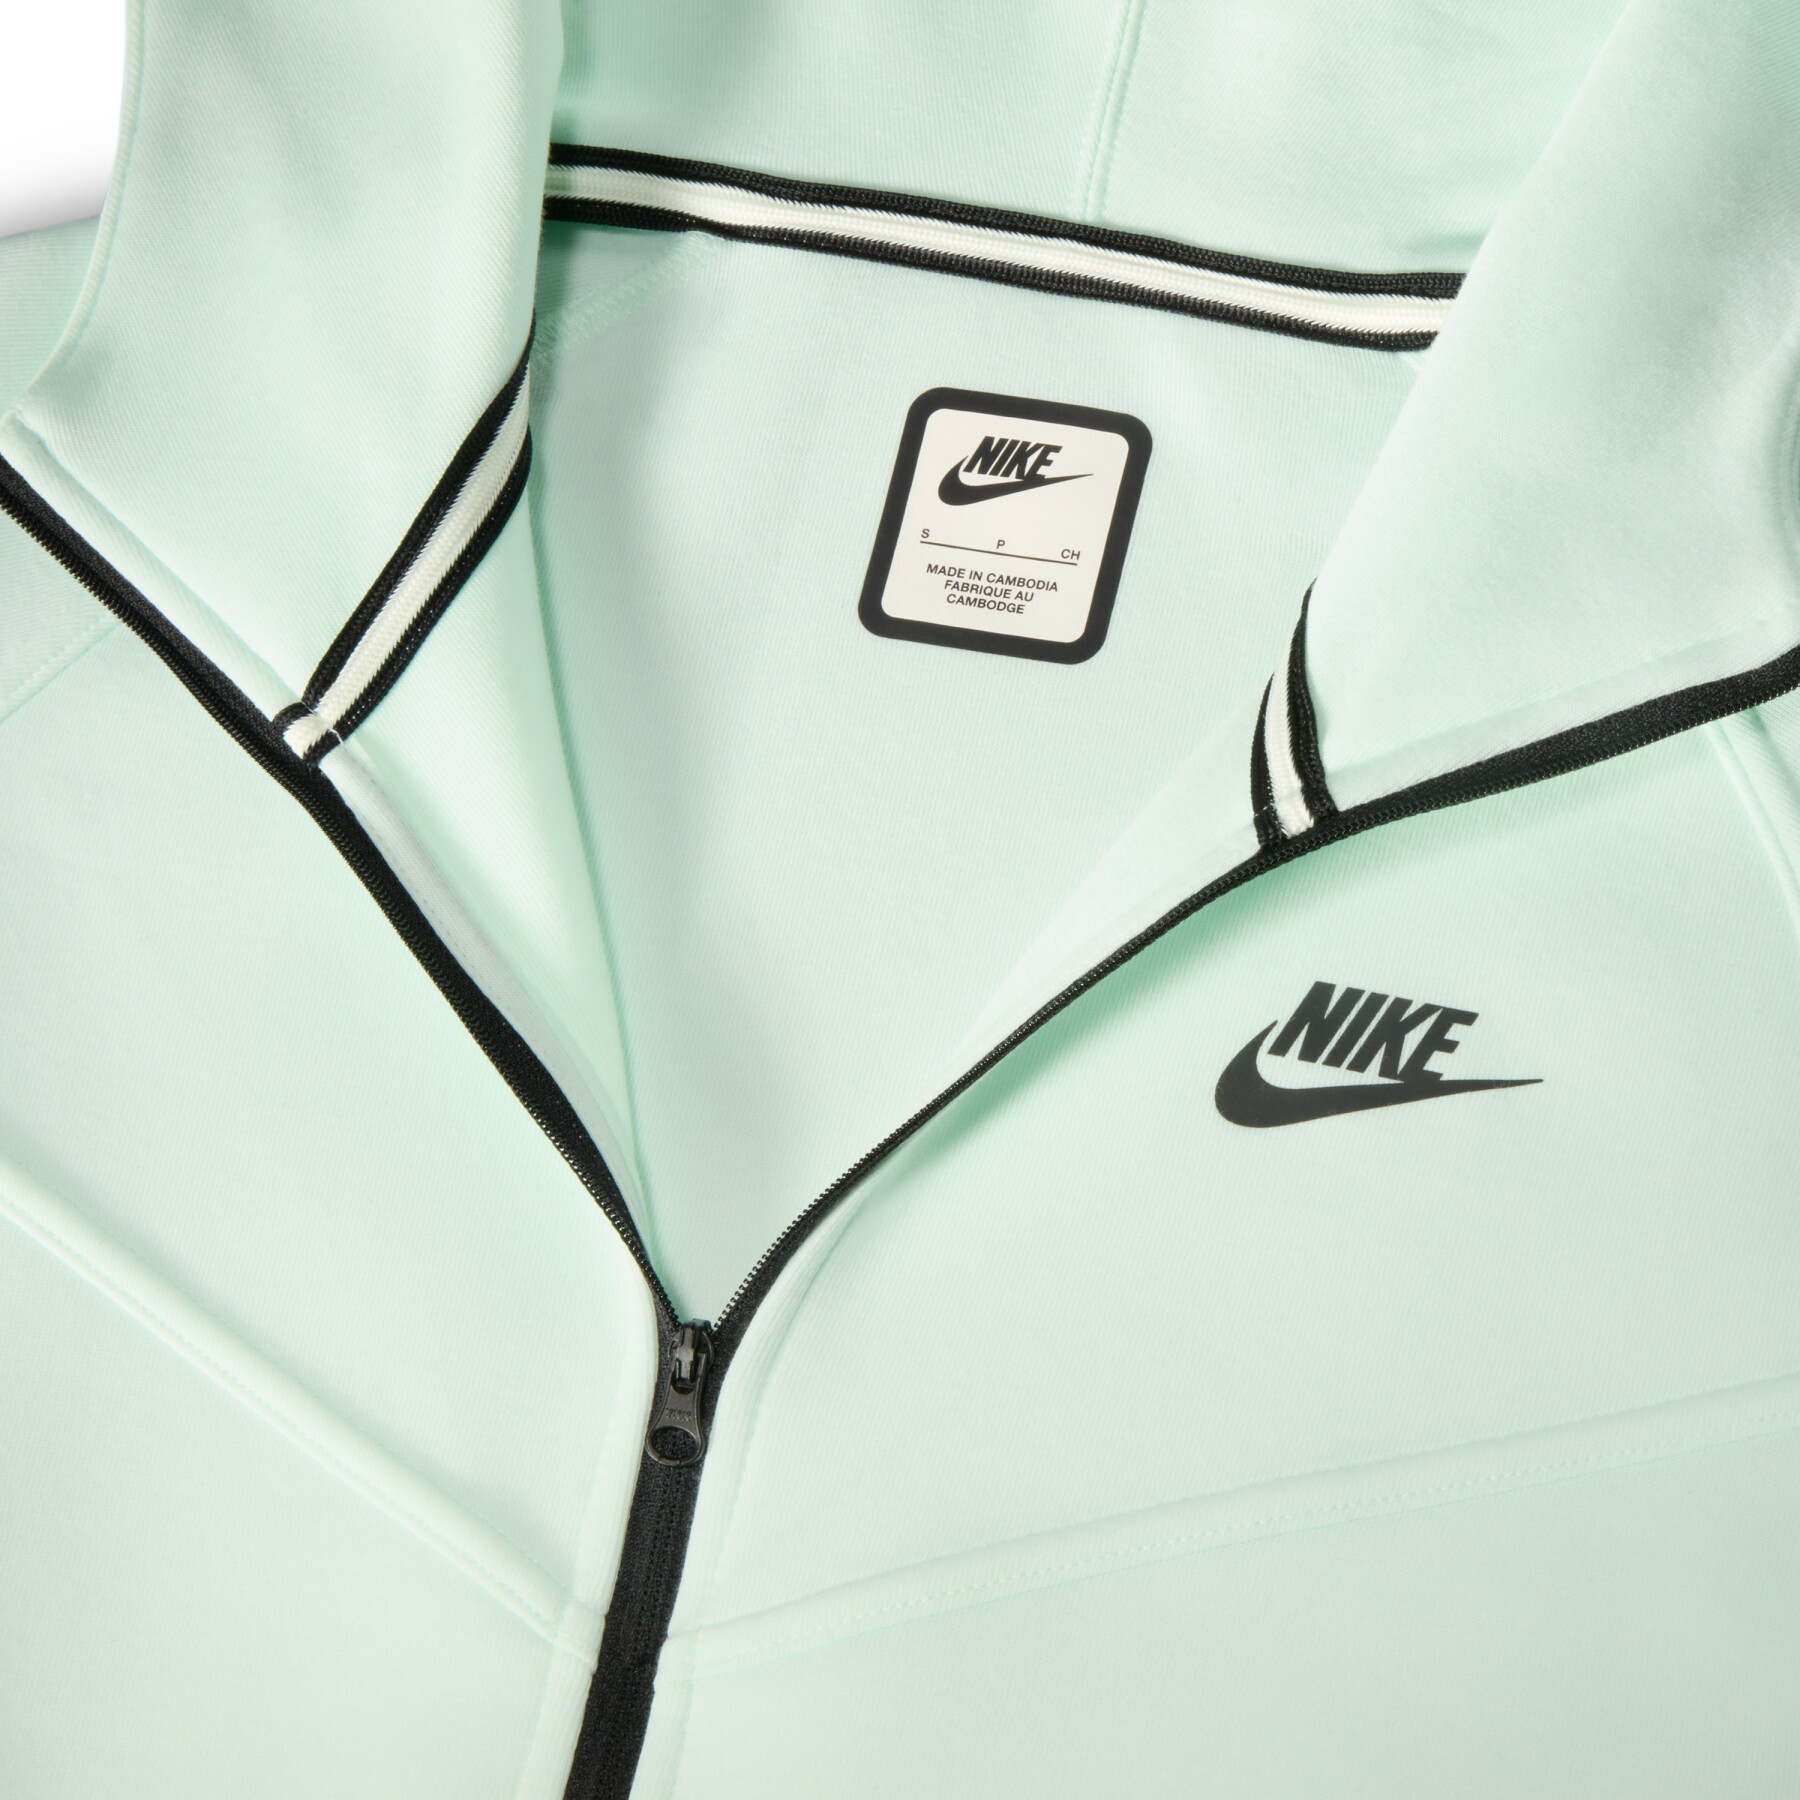 Camisola com capuz para mulher Nike Tech Fleece Windrunner